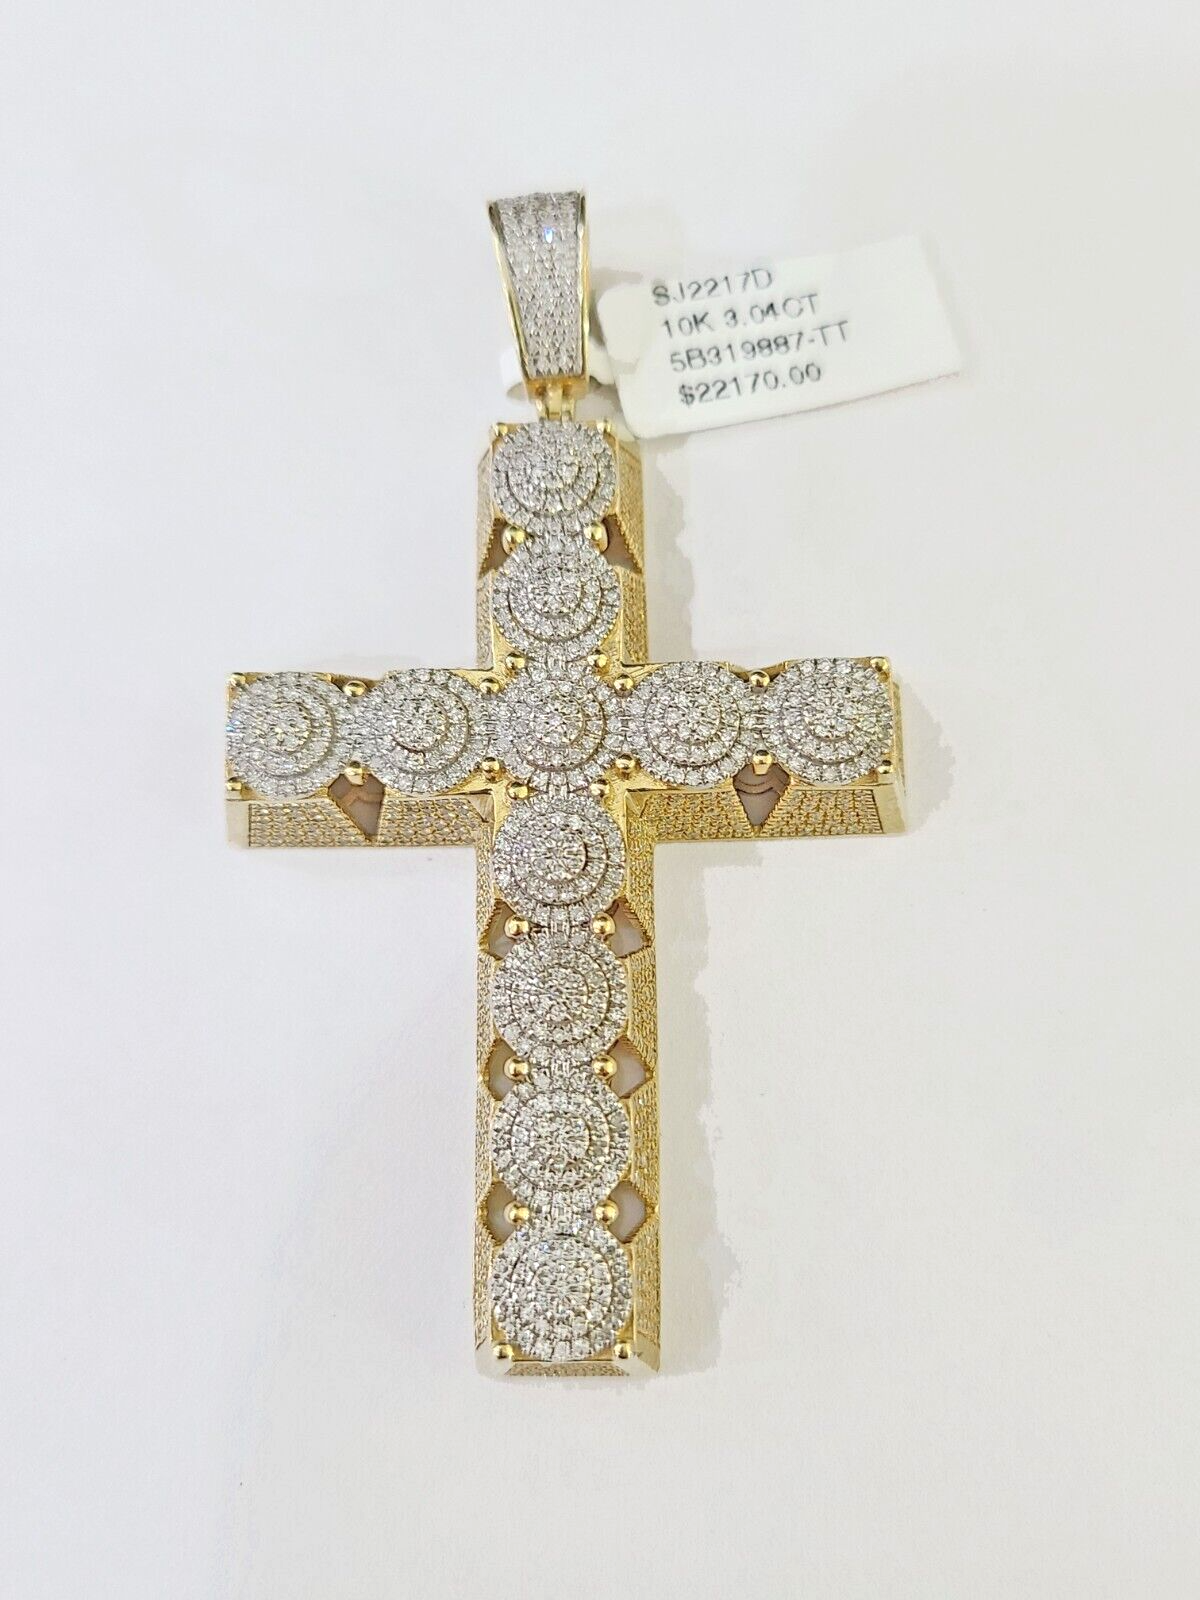 10k Circular Shaped Diamond Cross Charm Made With Yellow Gold And Diamonds